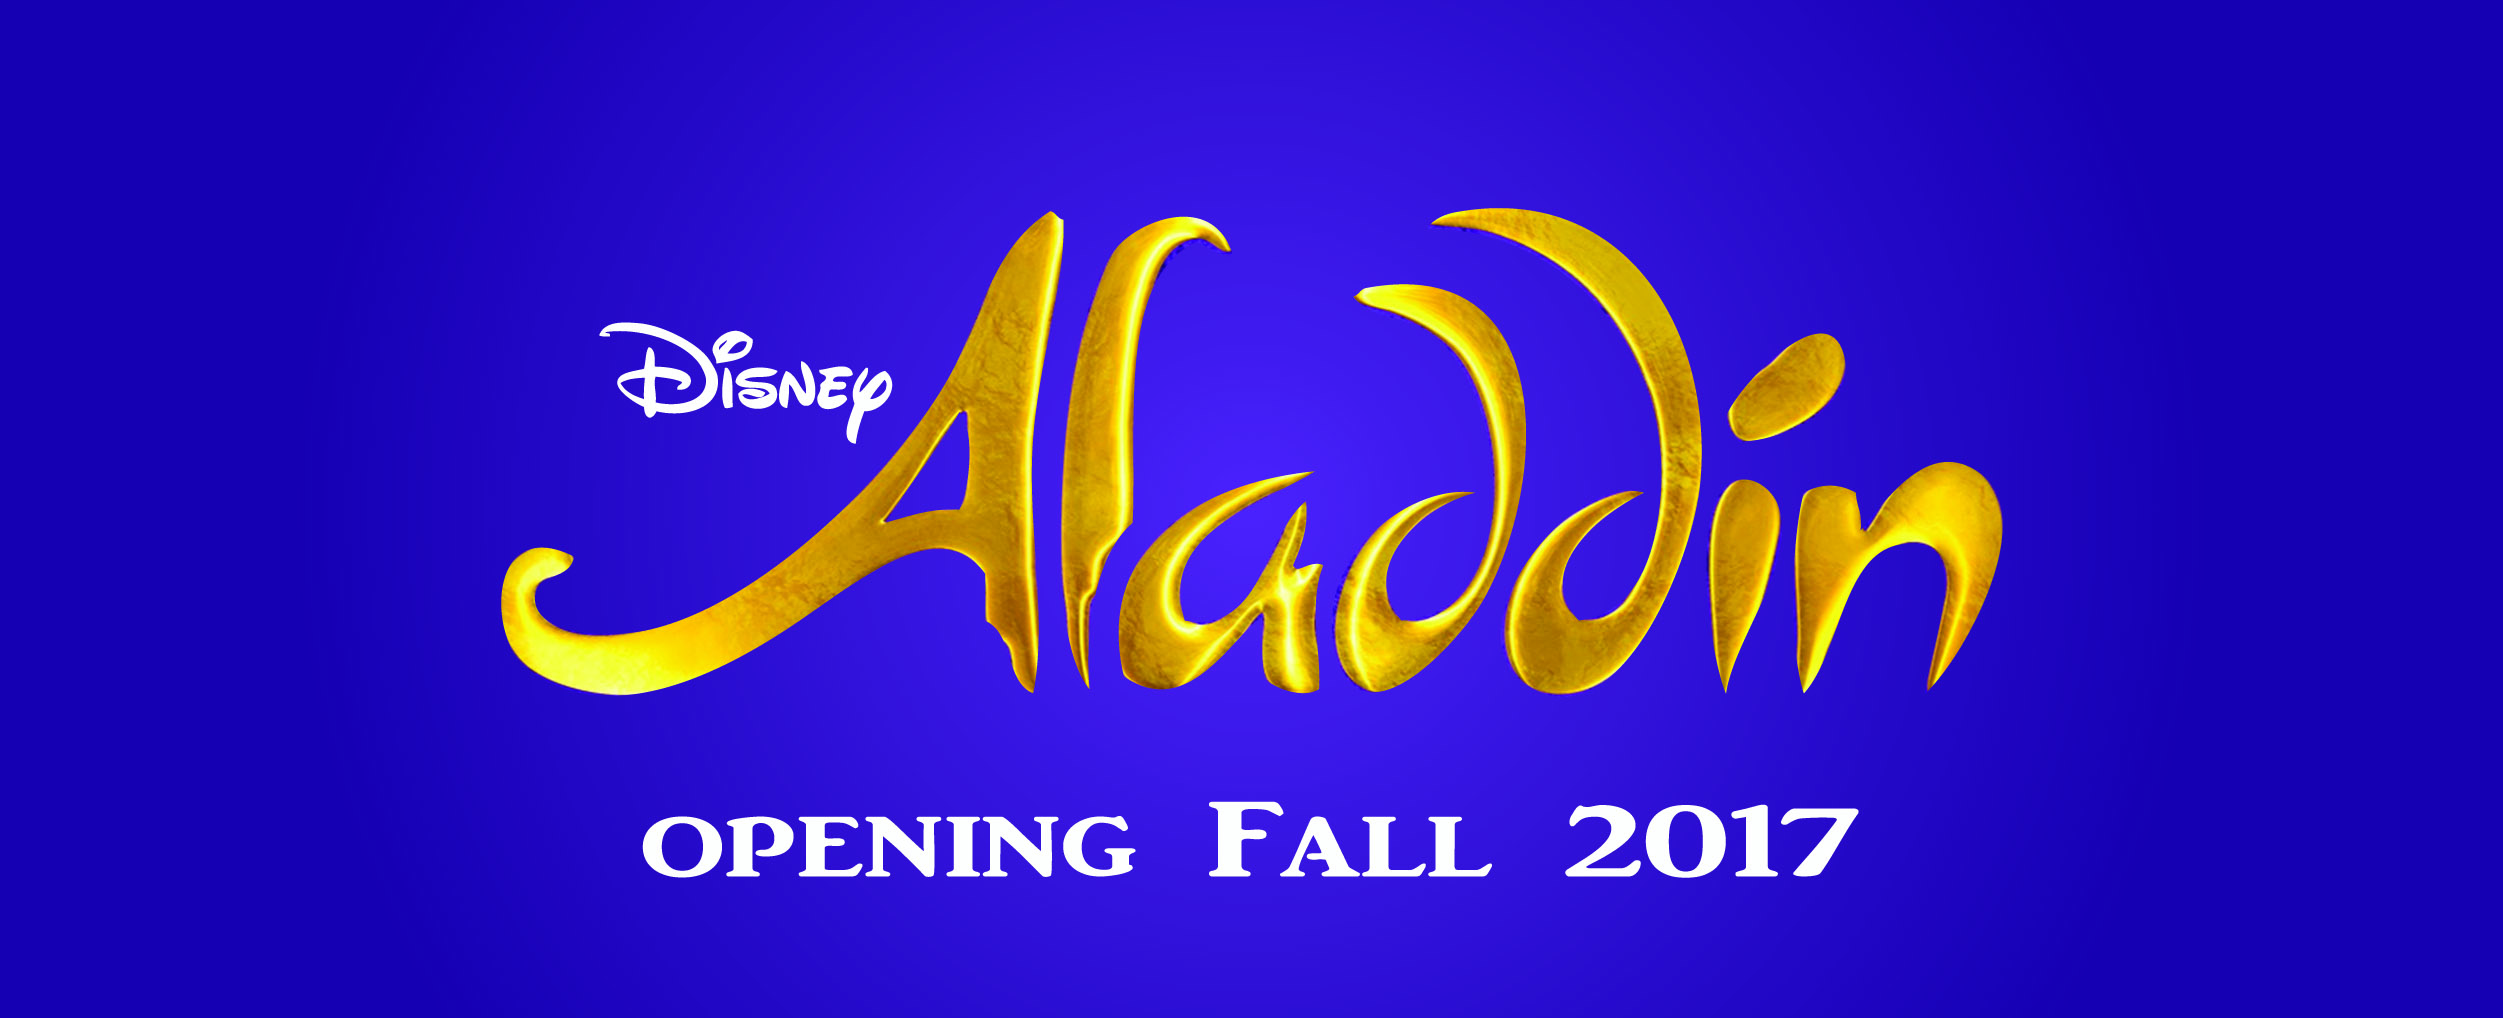 Disney's Aladdin Opening Fall 2017